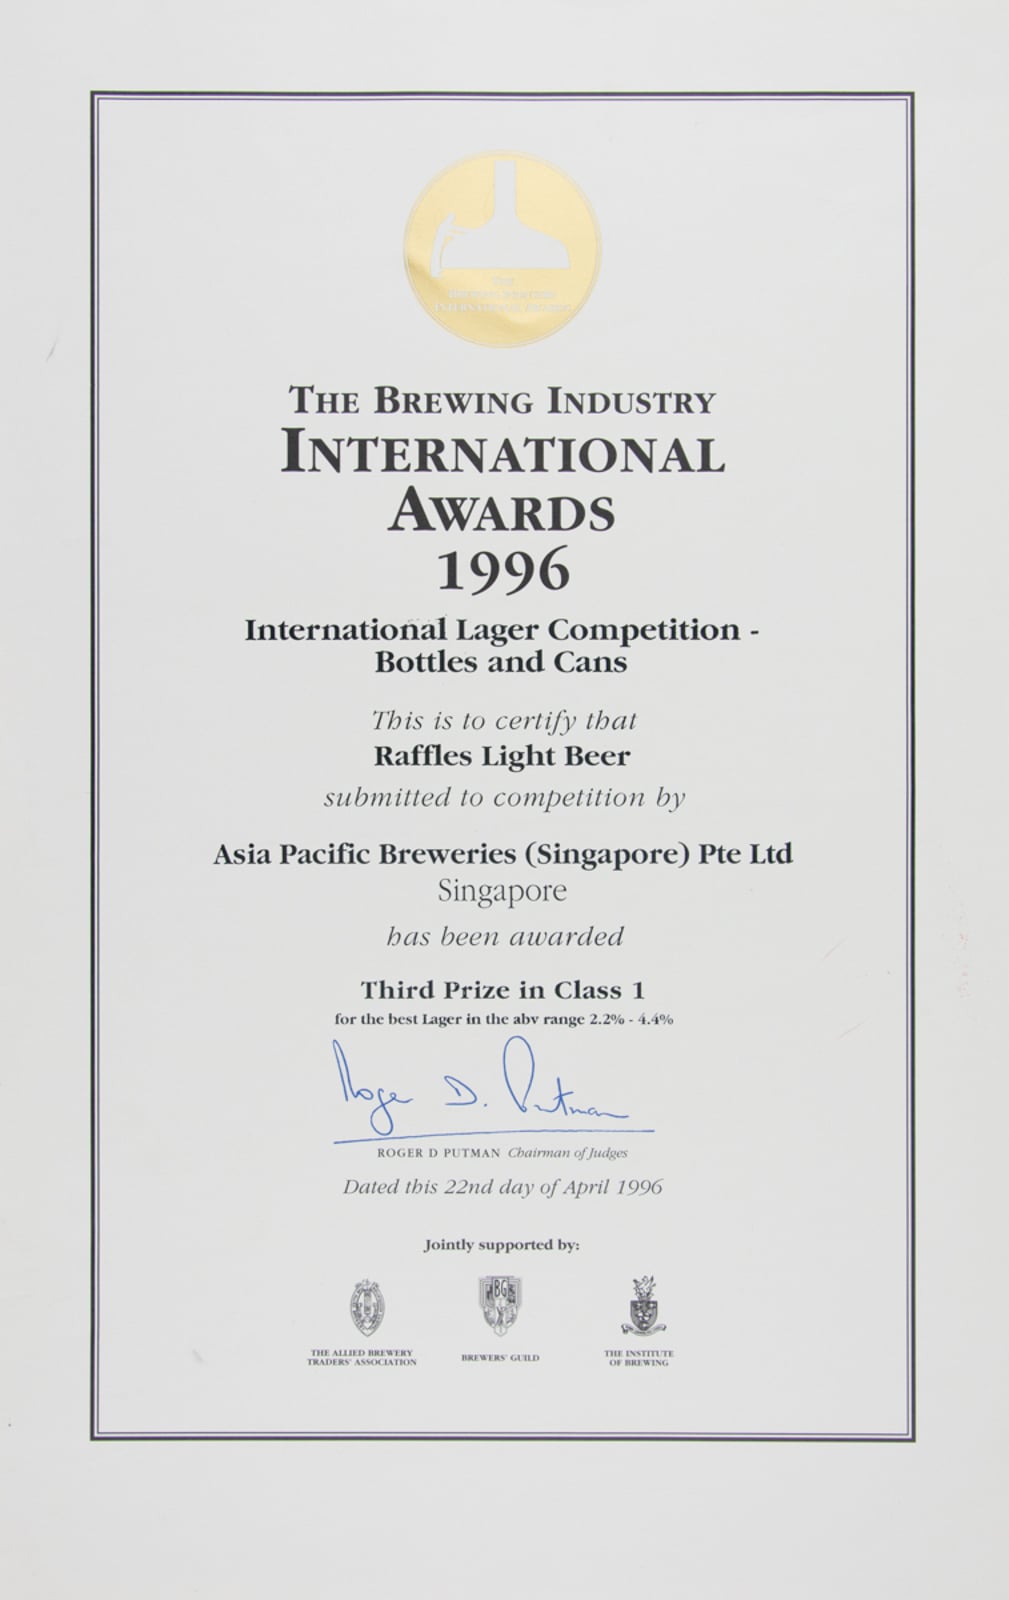 Raffles Light Beer (Bottles & Cans) 3rd Prize Class 1, The Brewing Industrty International Awards Certificate 1996